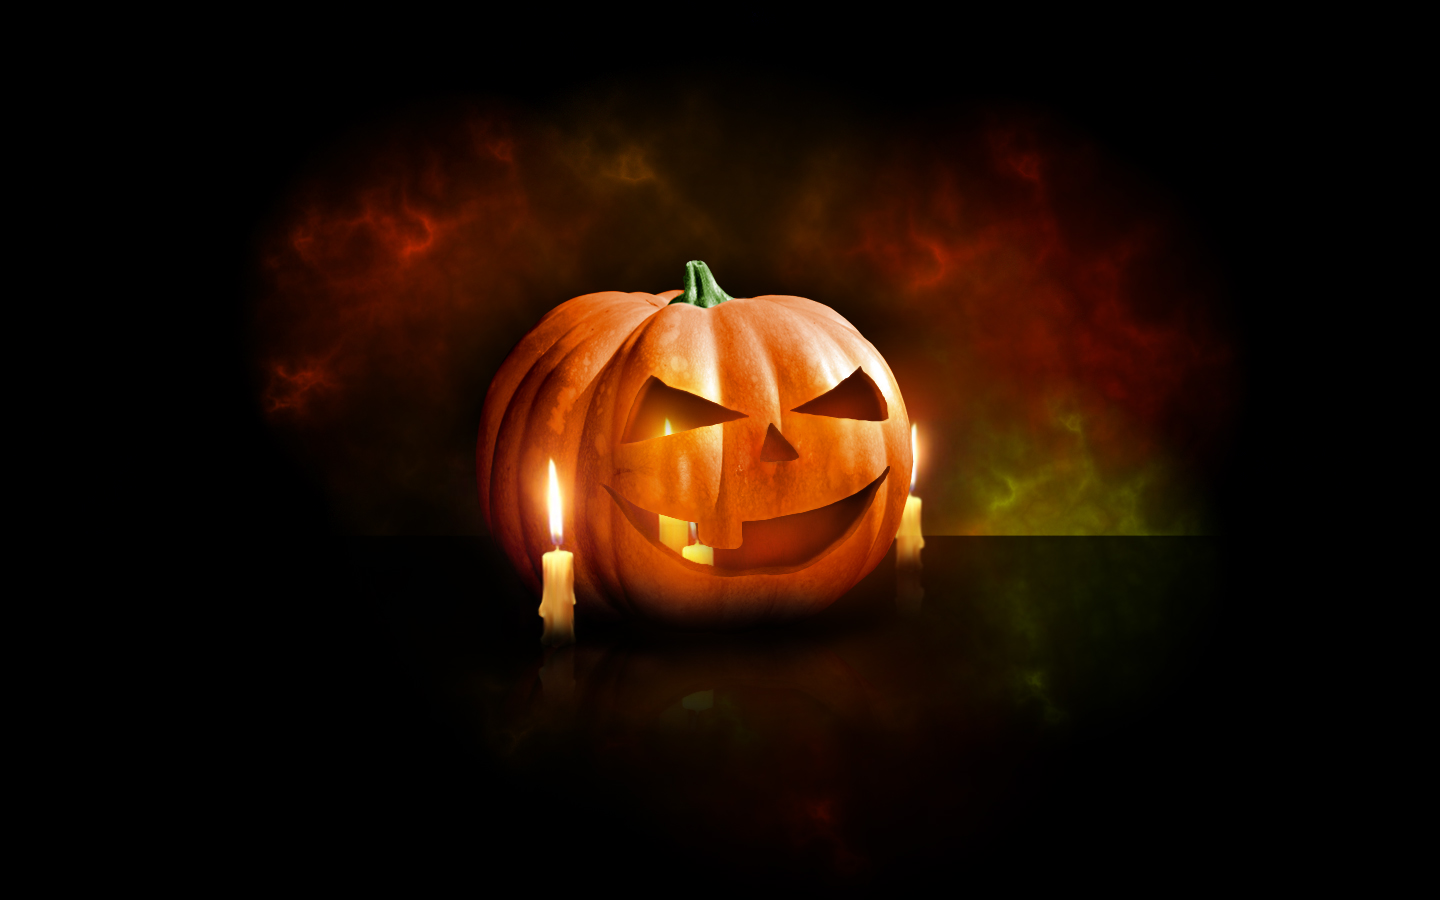 Design A Halloween Pumpkin Wallpaper In Photoshop